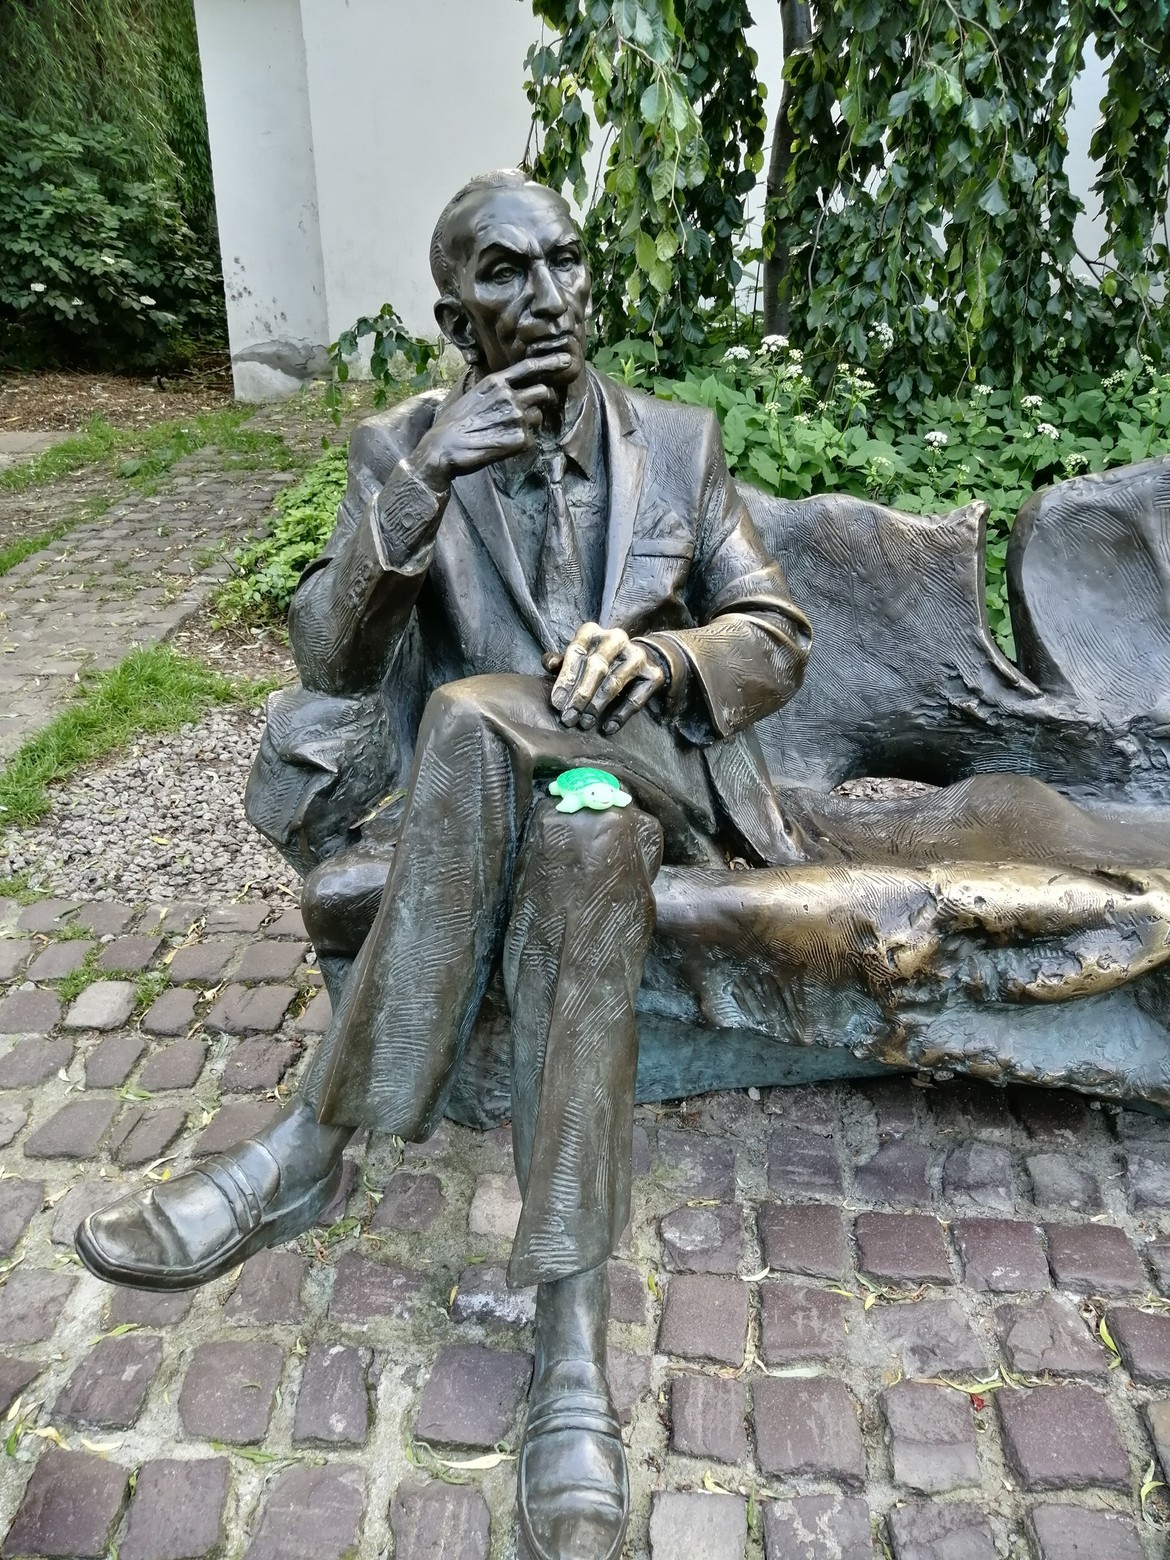 Jan Karski bench in Krakow where you can sit down to listen...